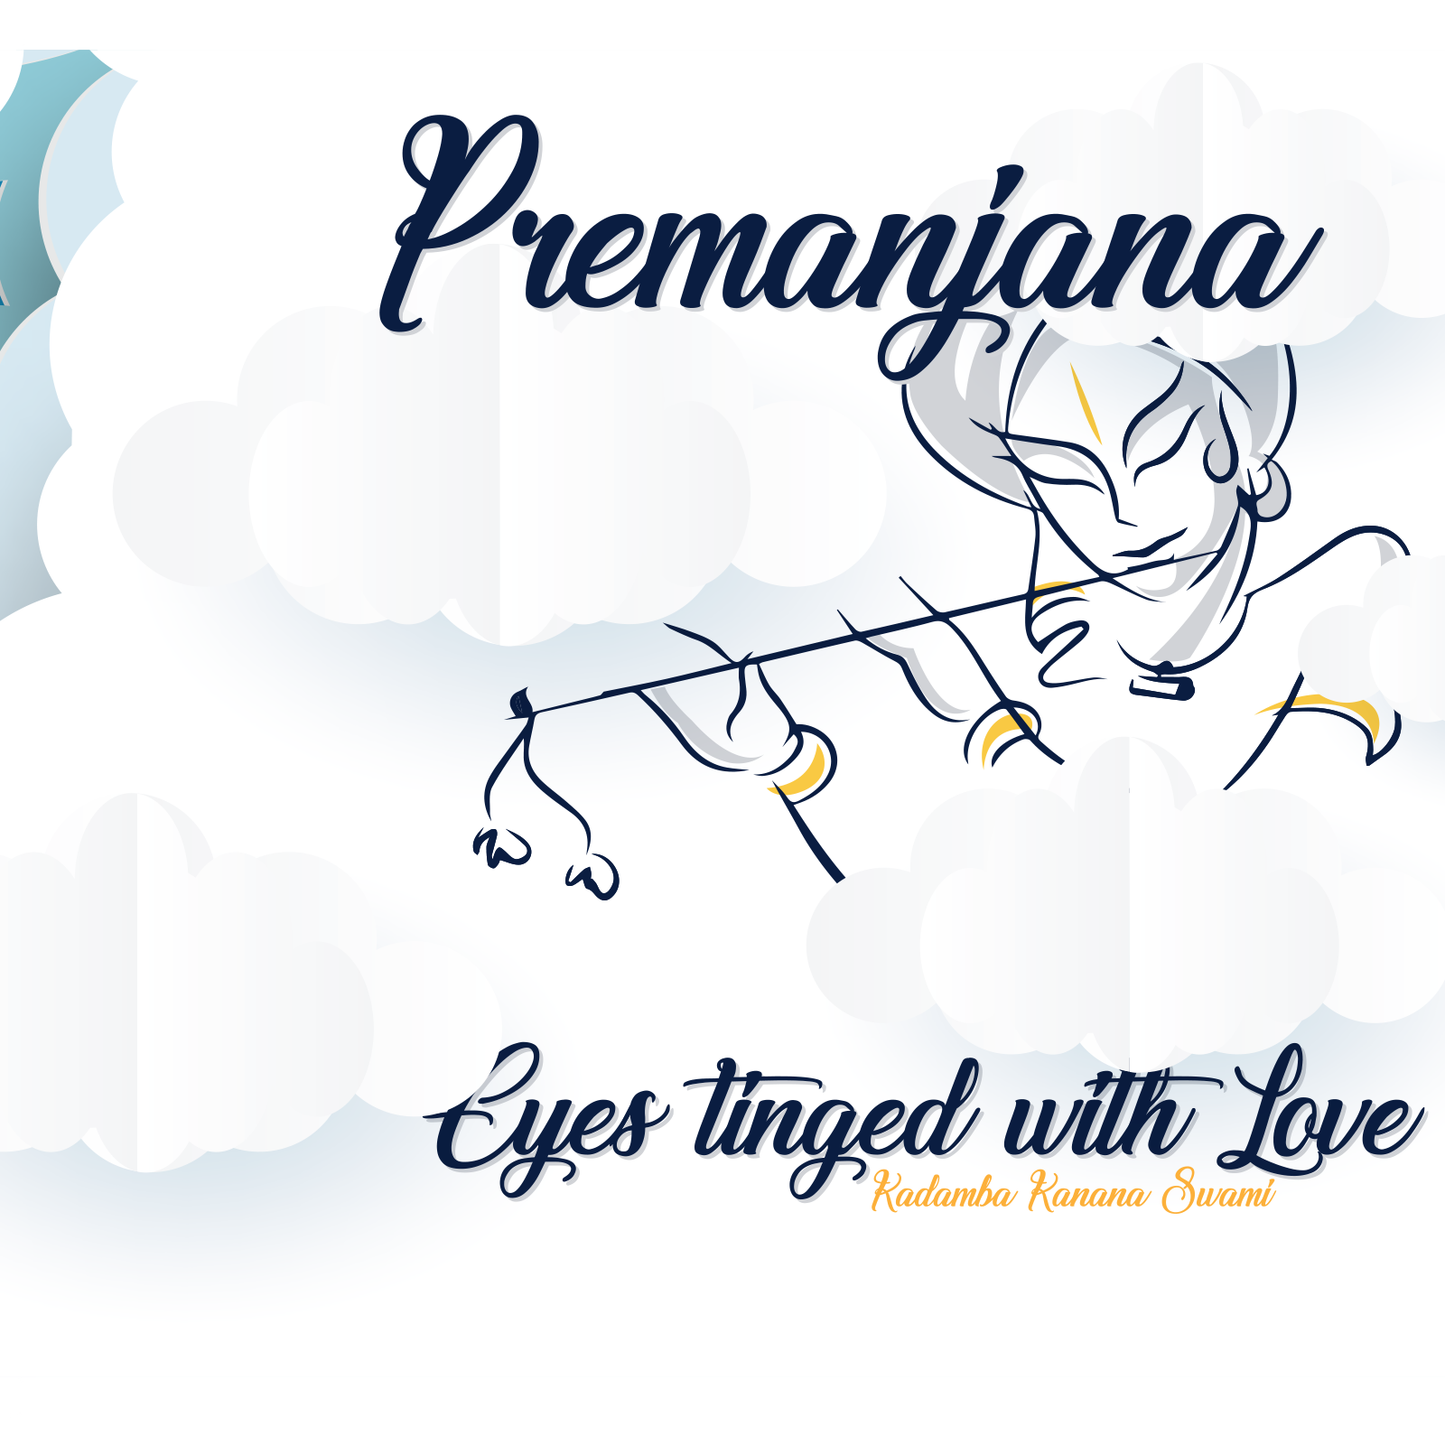 Premanjana - Eyes Tinged with Love (download)